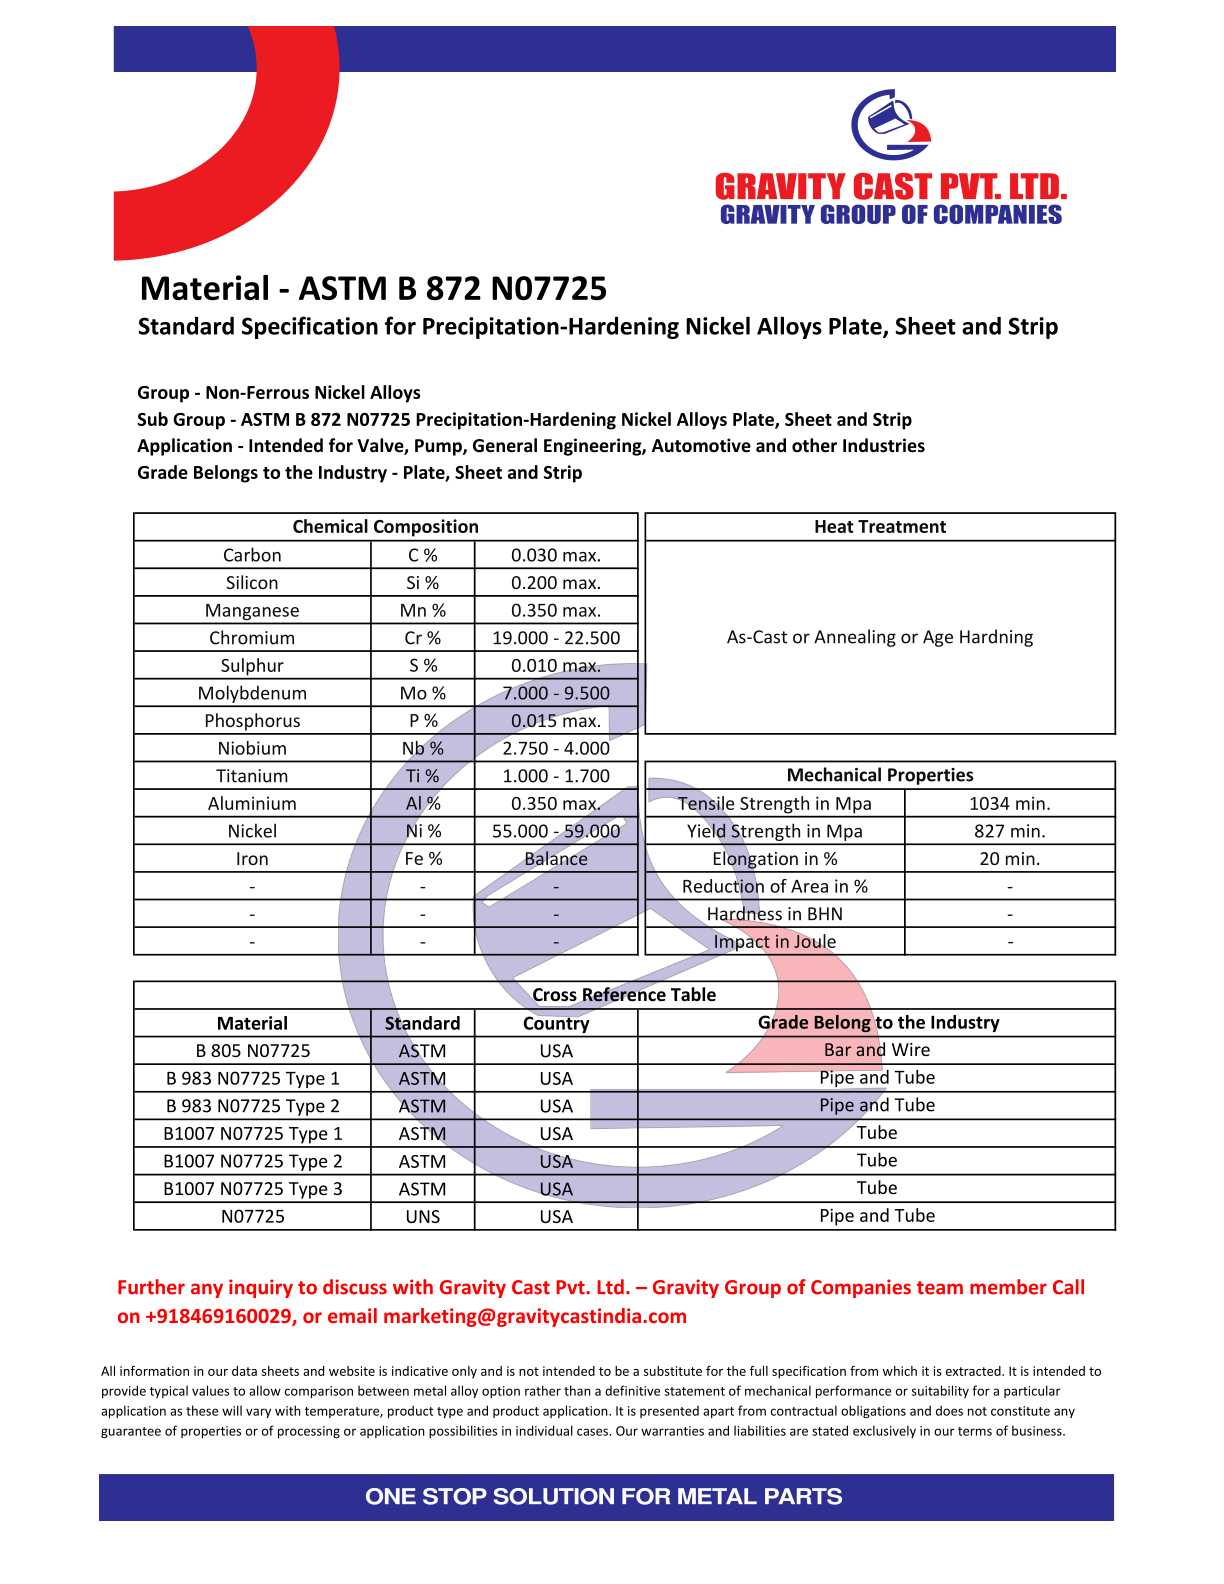 ASTM B 872 N07725.pdf